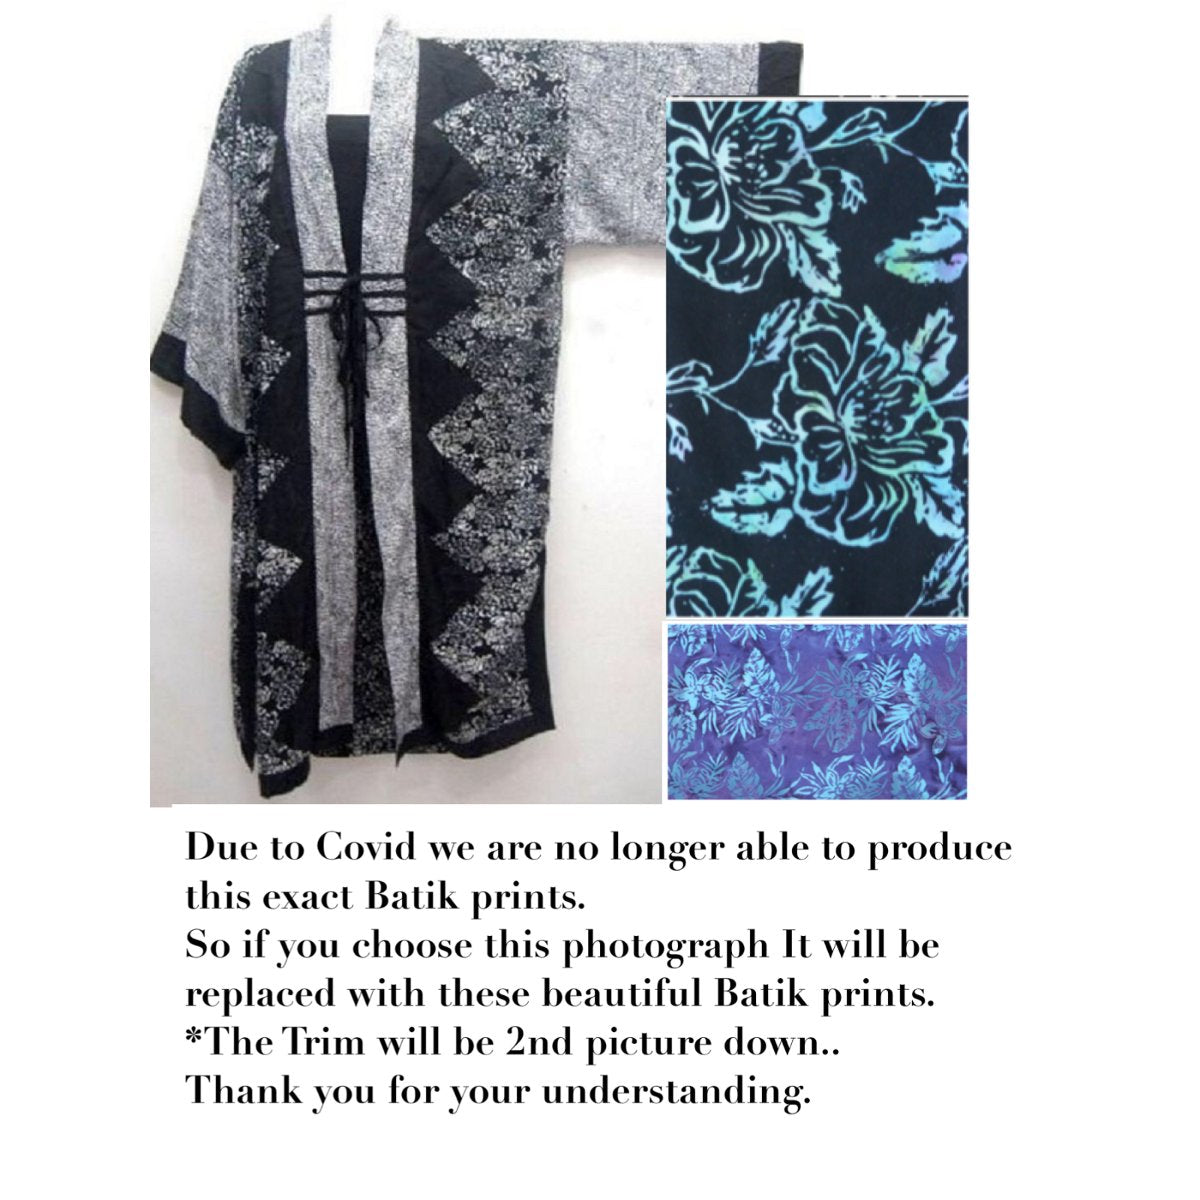 Giavanna Charming Kimono Patchwork Batik Jacket - The Bohemian Closet